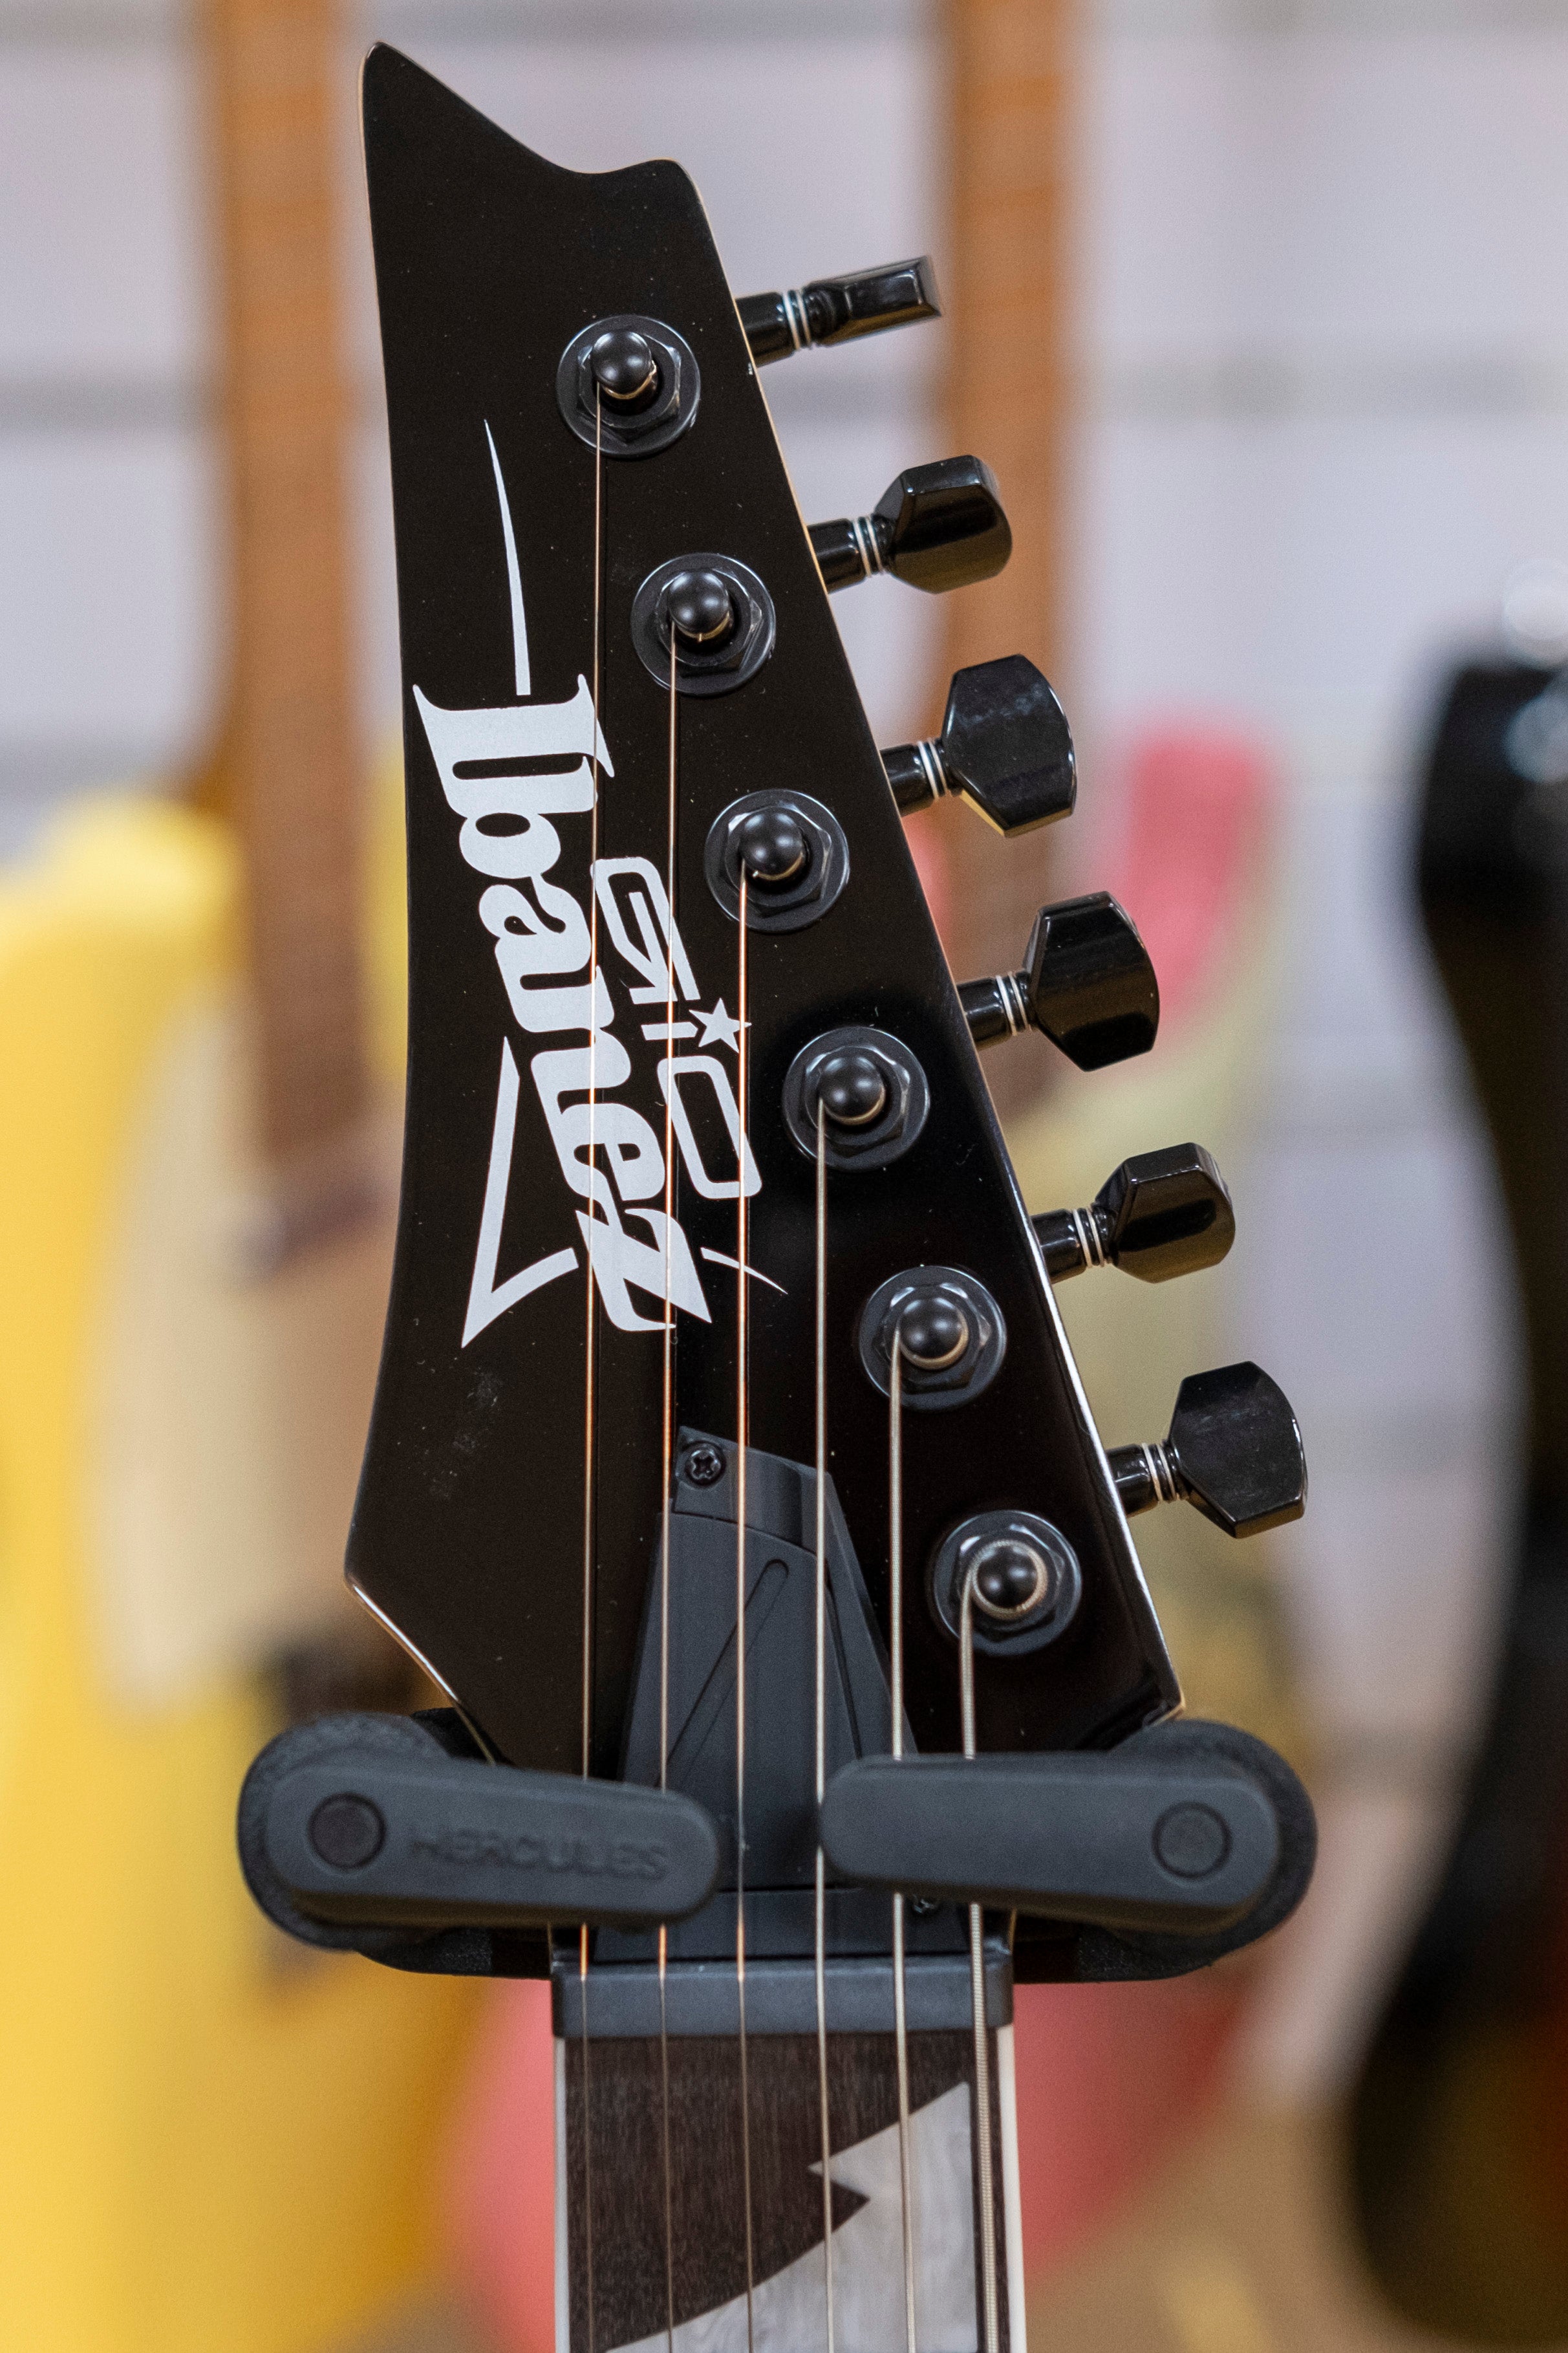 Ibanez RG121DXL Left Handed Electric Guitar (Walnut Flat)